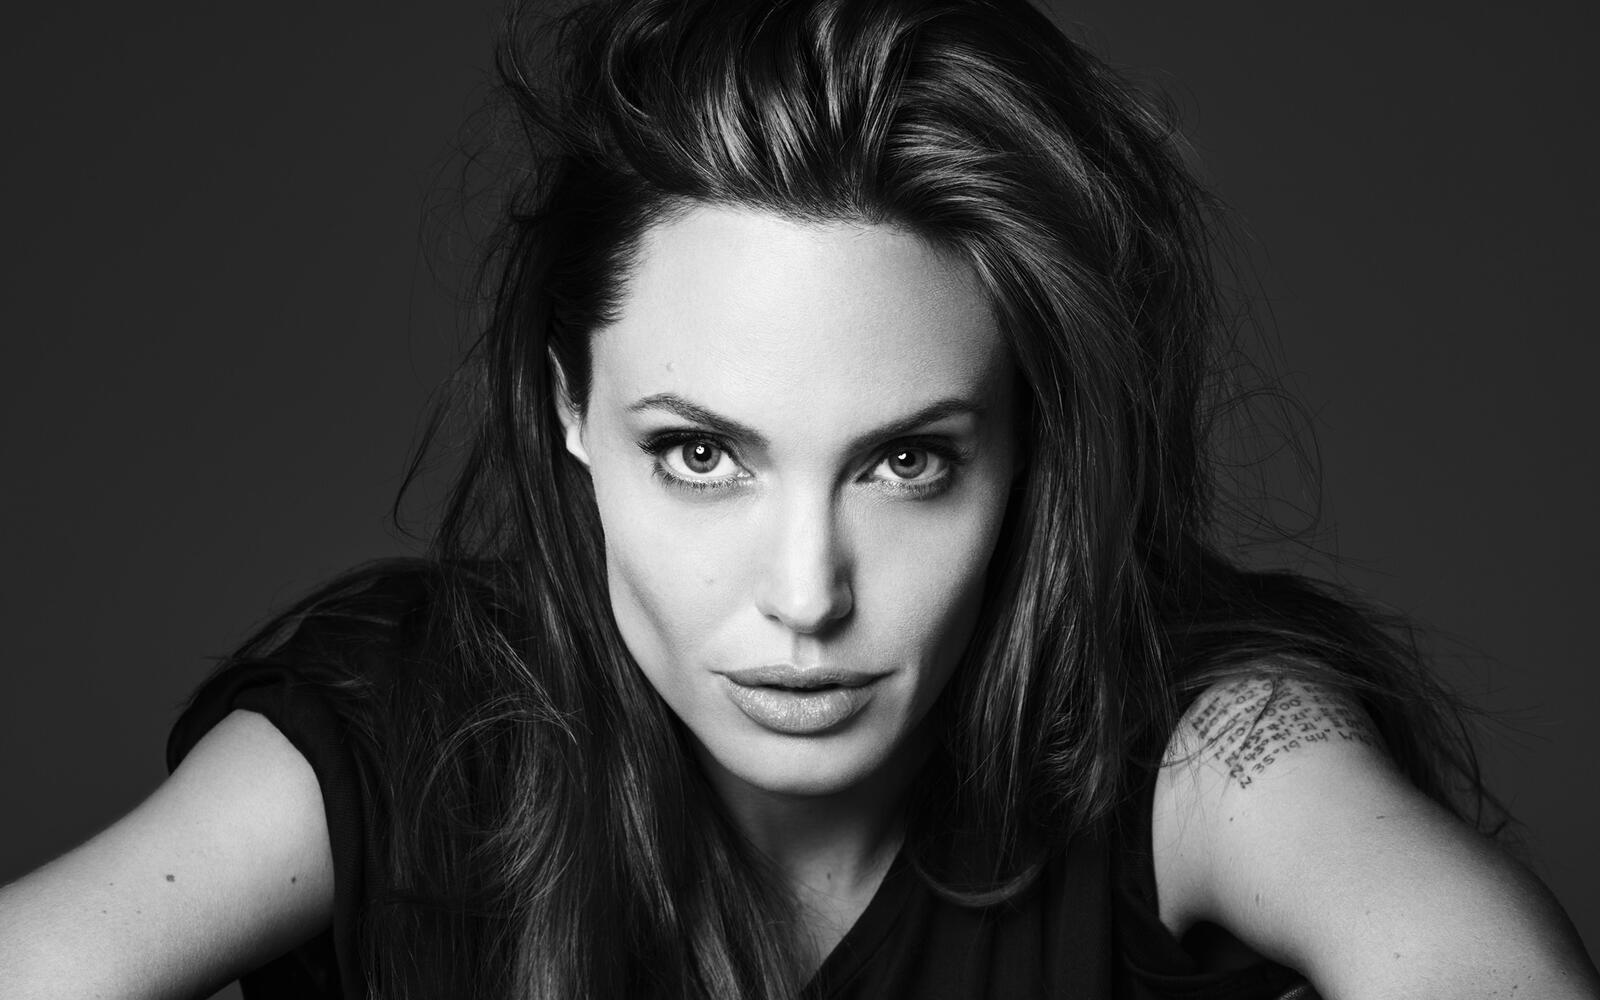 Wallpapers girls Angelina Jolie photoshoot on the desktop